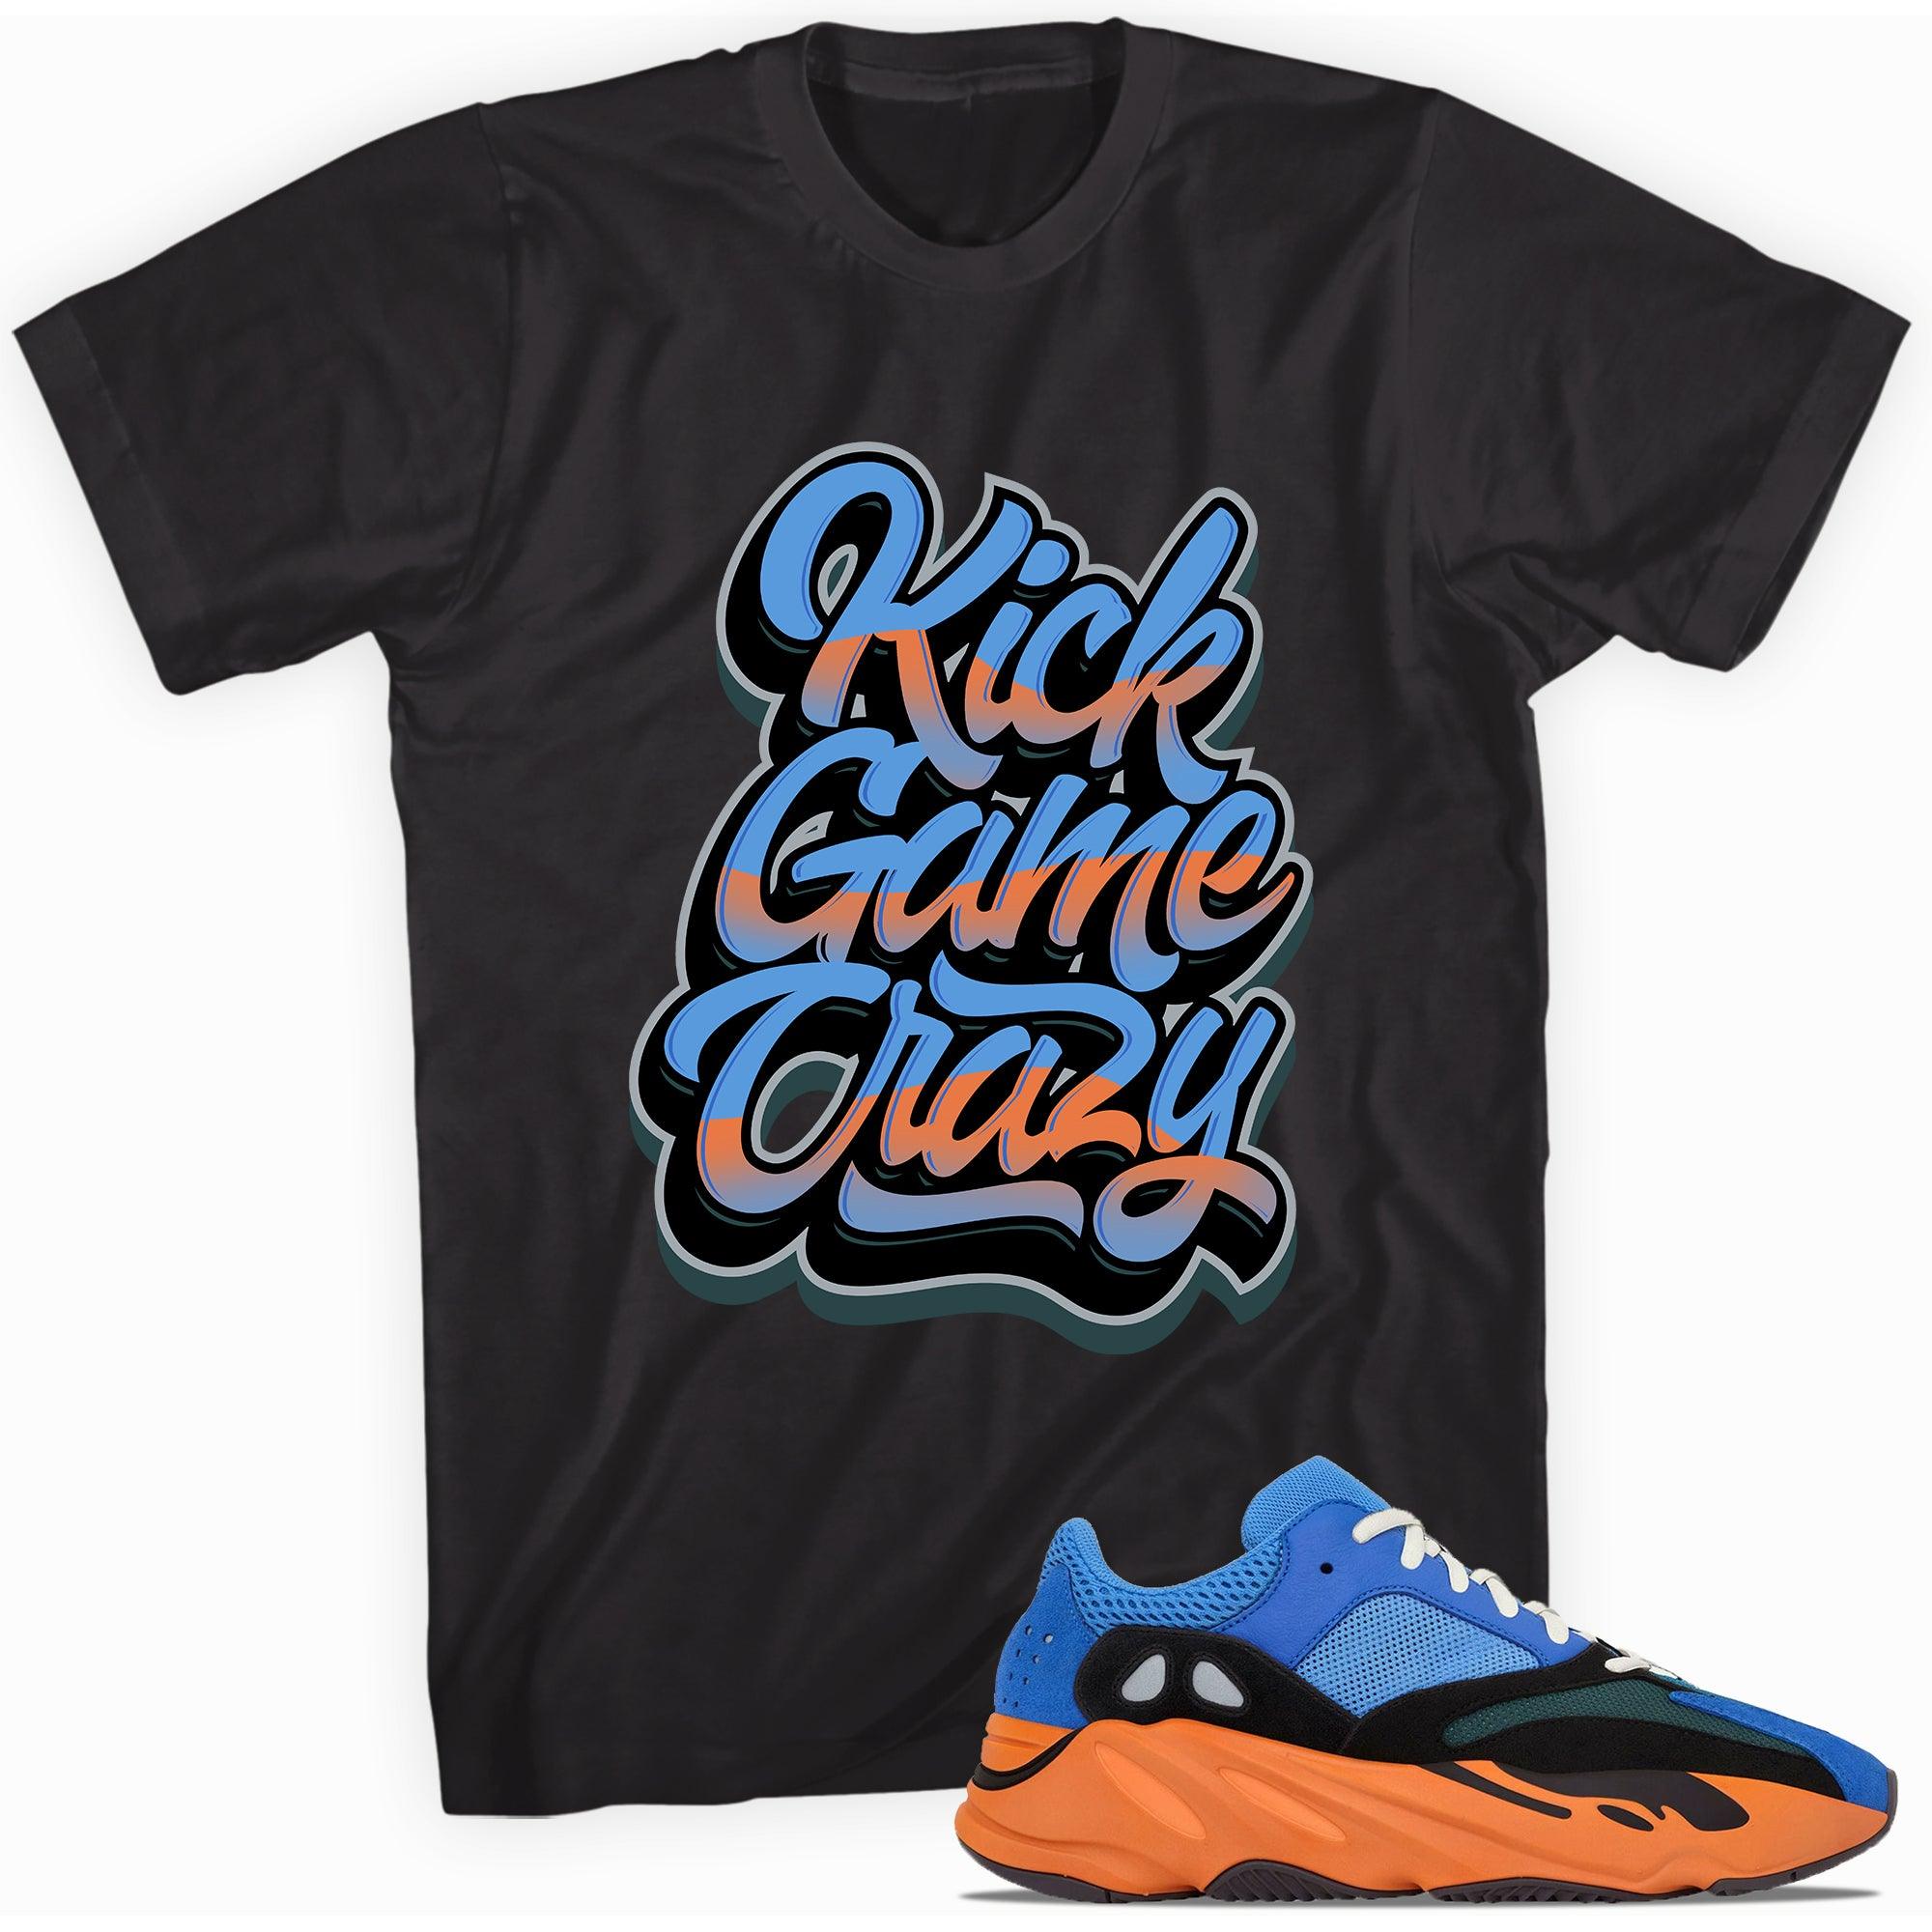 Black Kick Game Crazy Shirt Yeezy Boost 700s Bright Blue photo